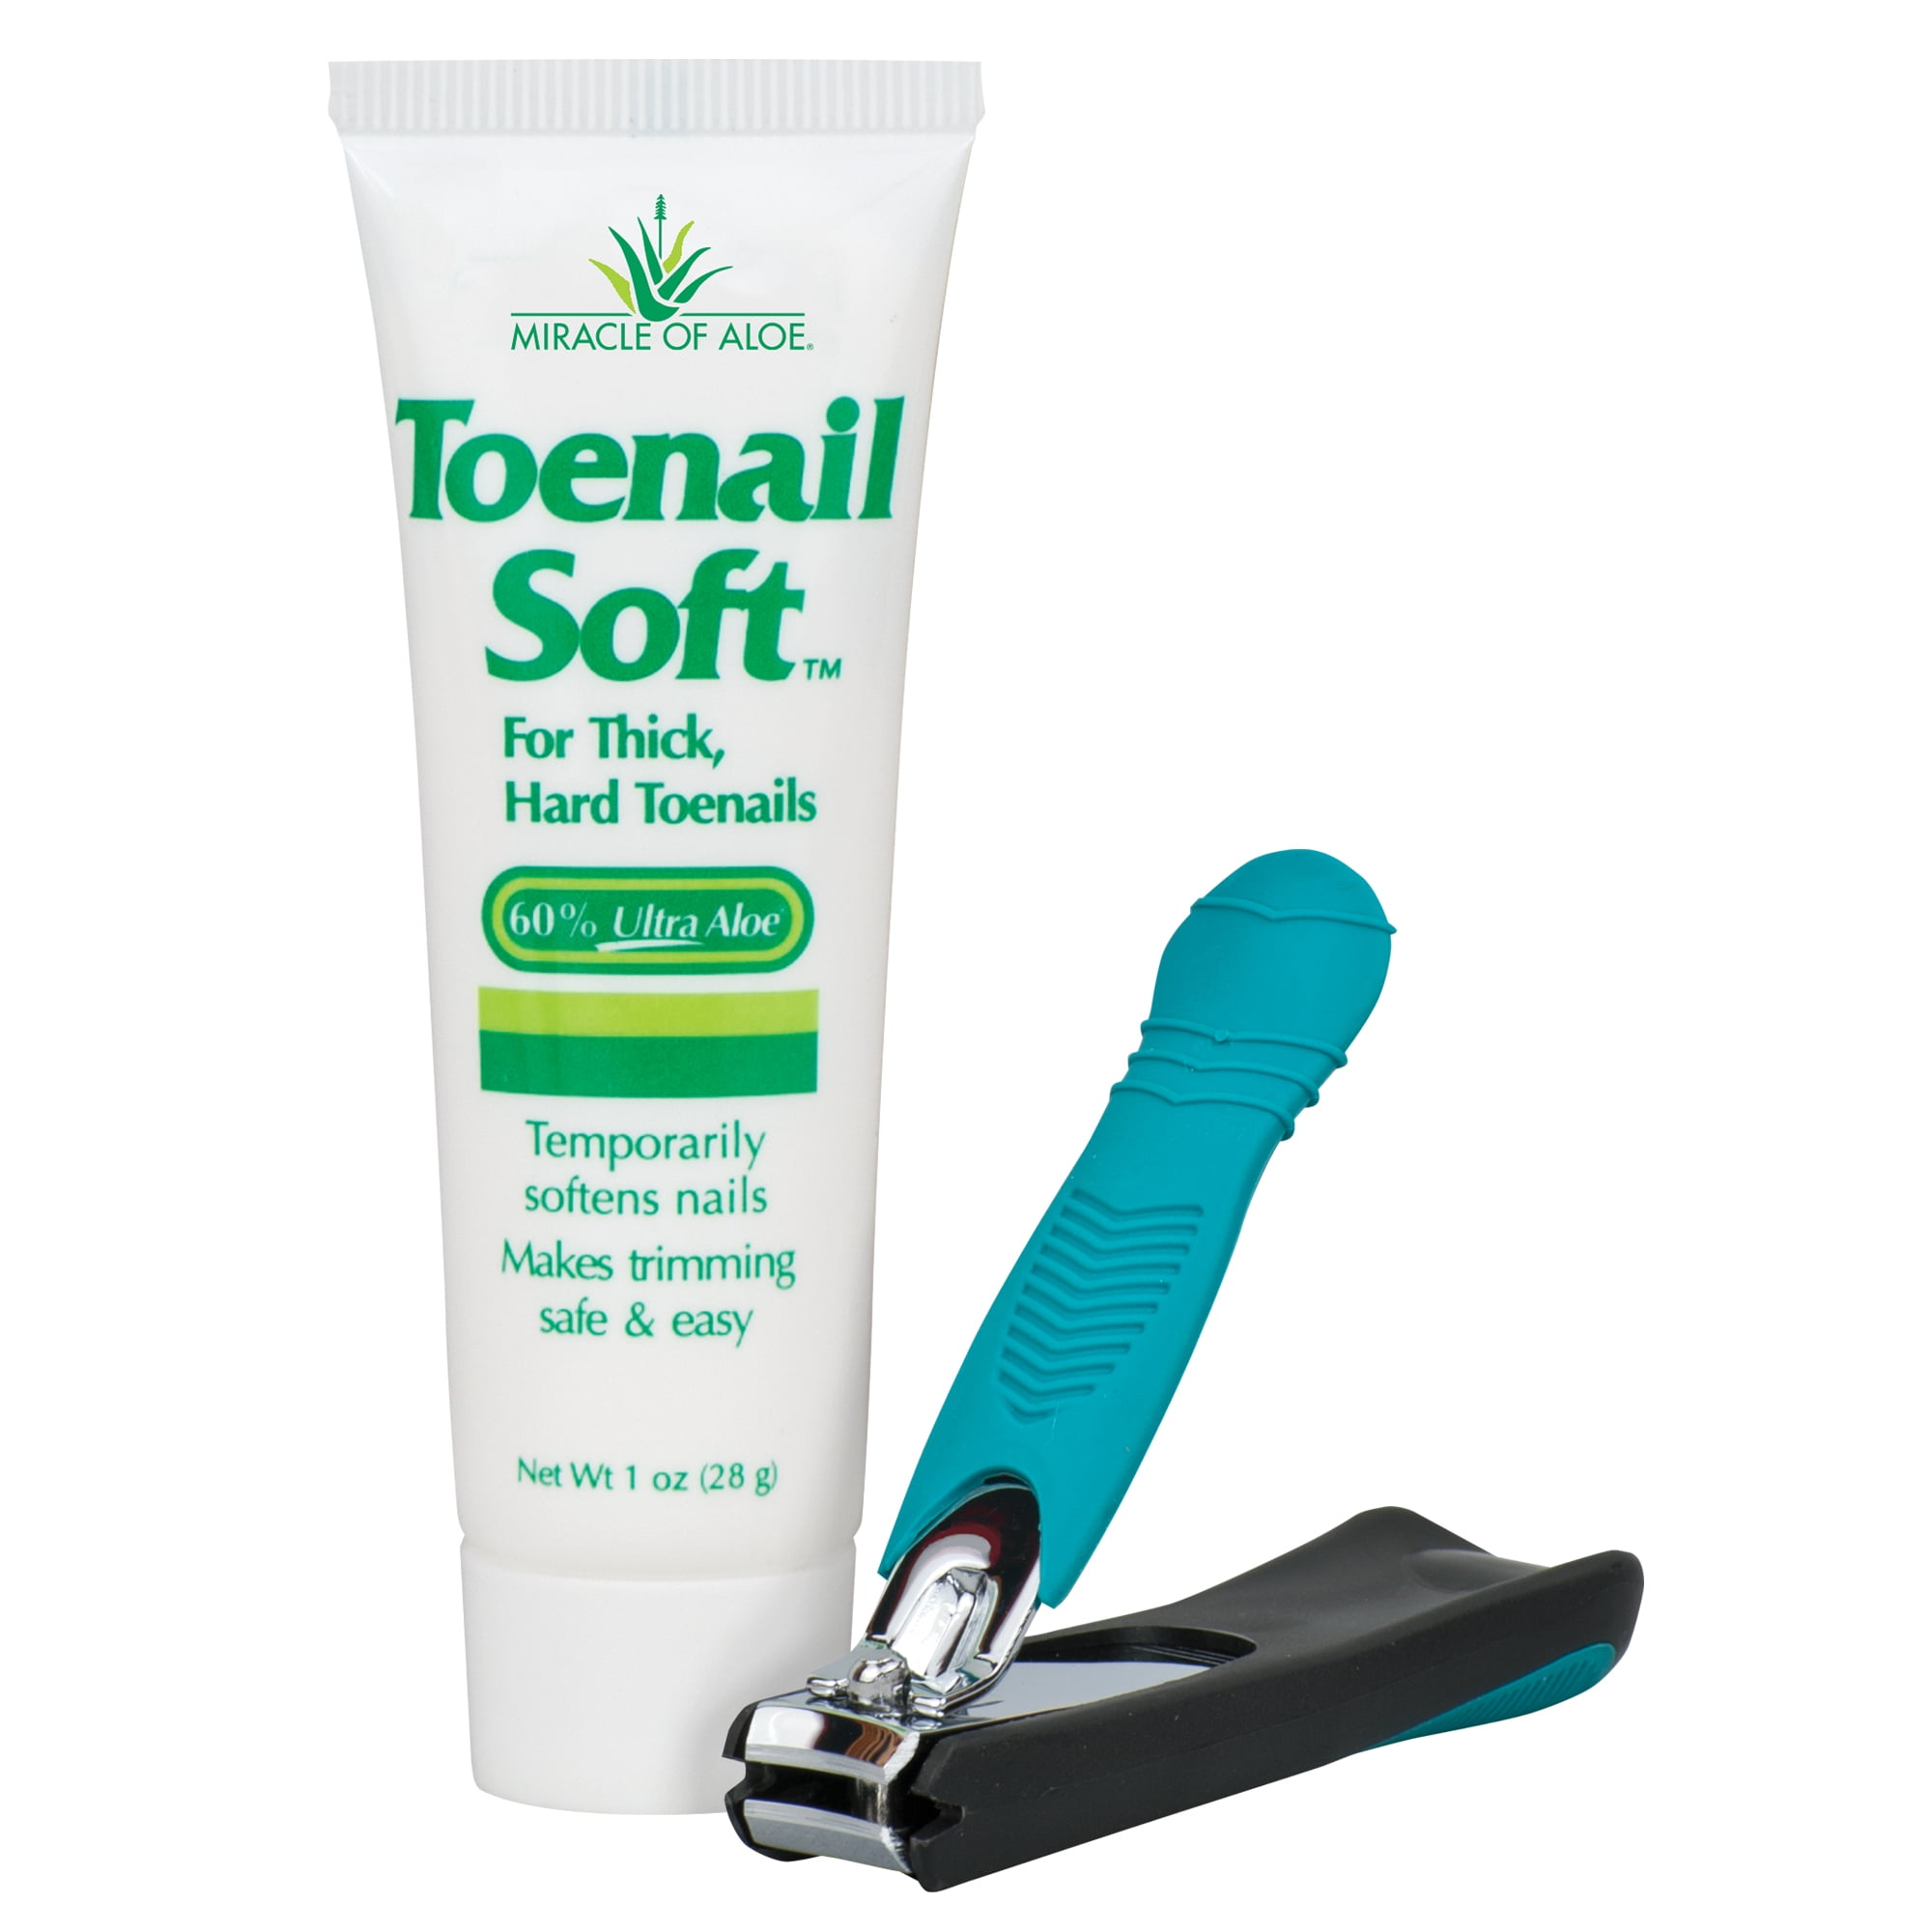 Toenail Soft 1 oz. Temporary Nail Softening Cream with 60% Ultra Aloe PLUS  FREE Easy Hold Toenail Clipper by TRIM, Soften Ingrown Toenails -  